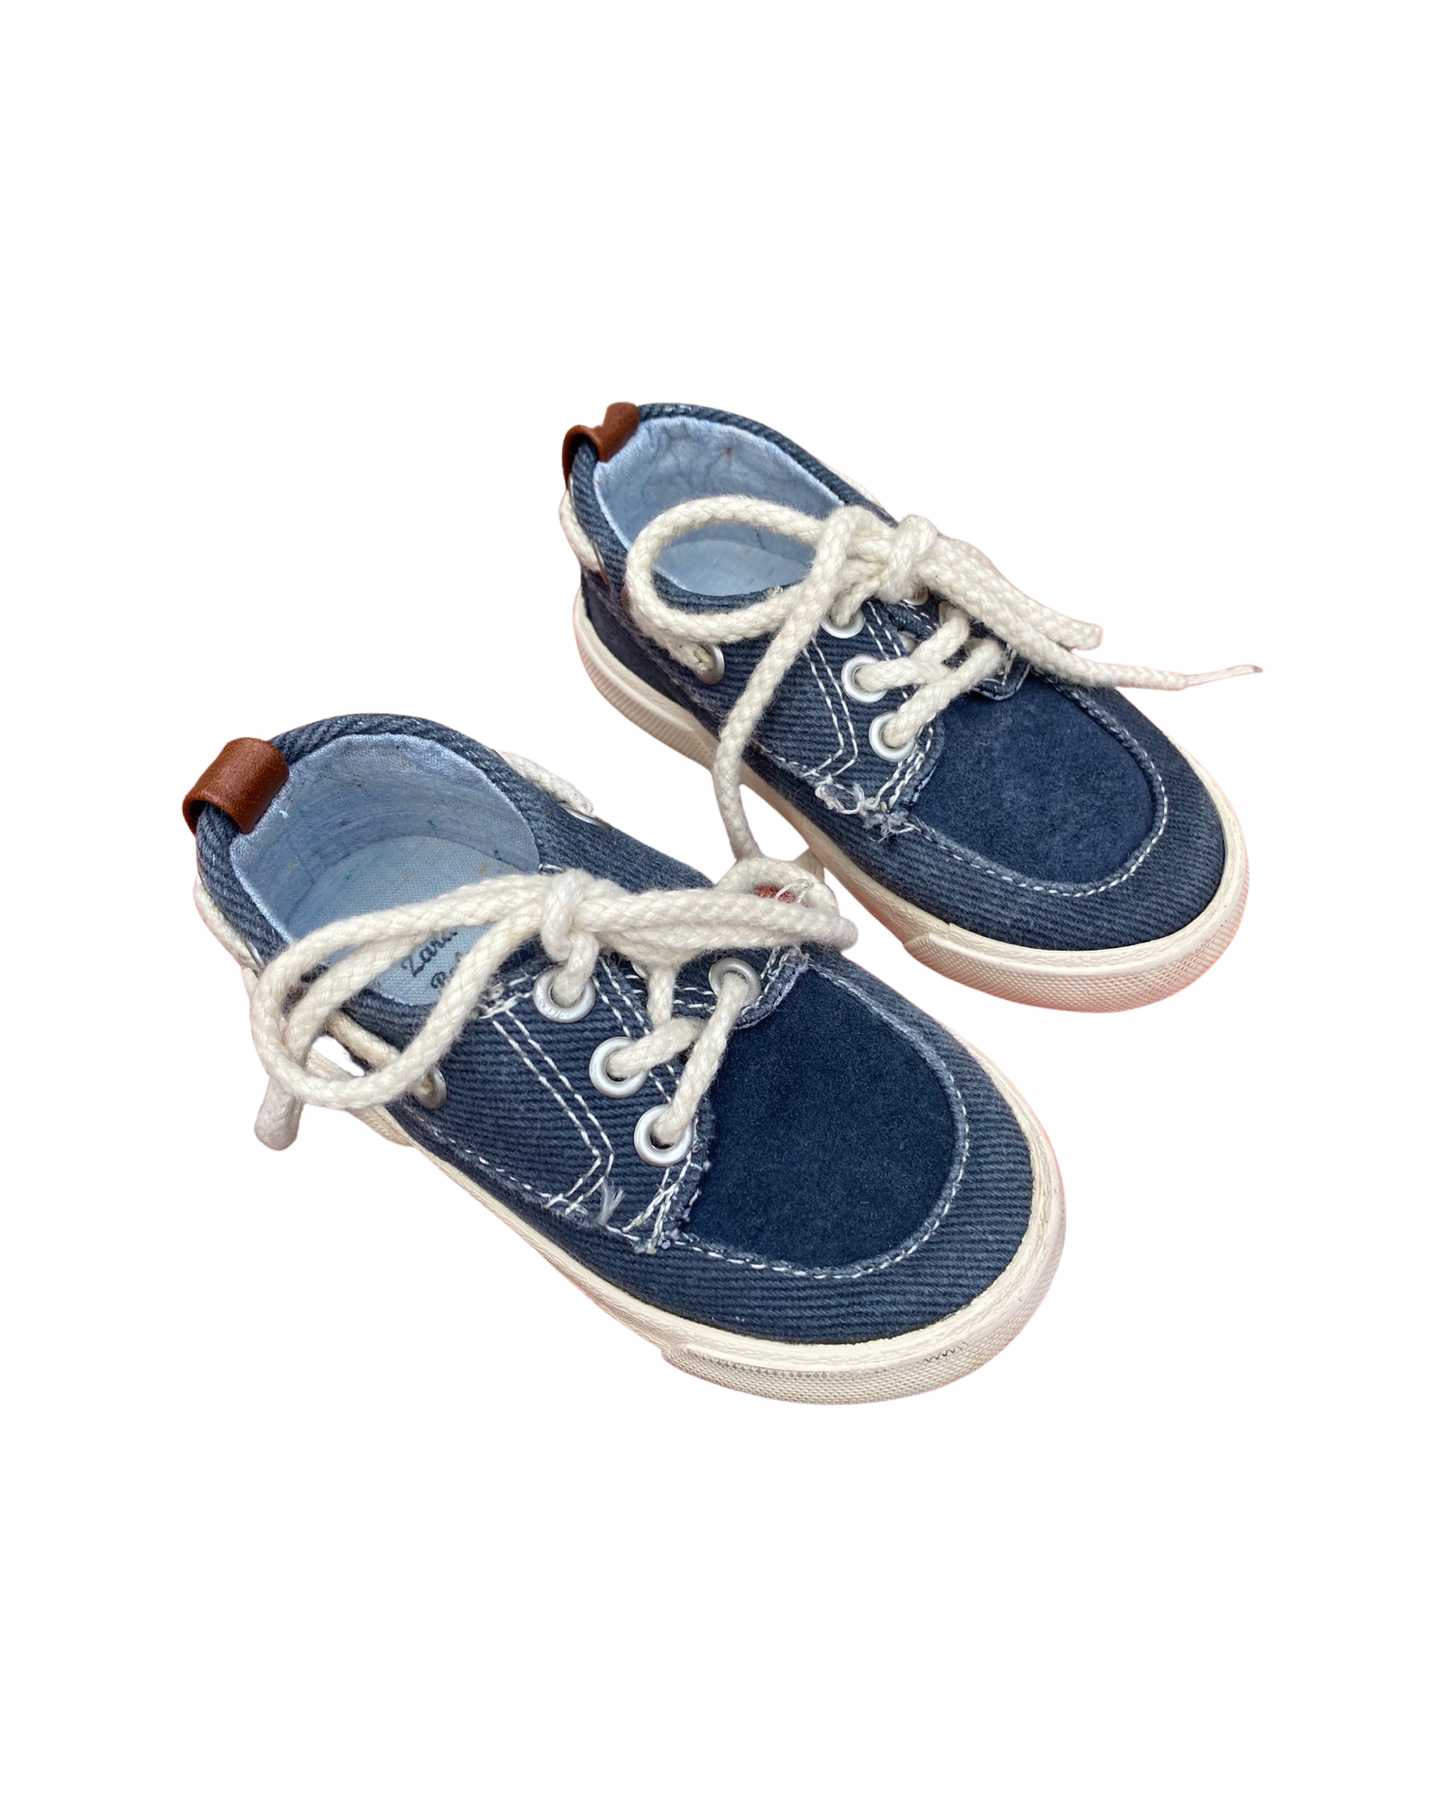 Baby Zara canvas shoe (size EU20/UK4)